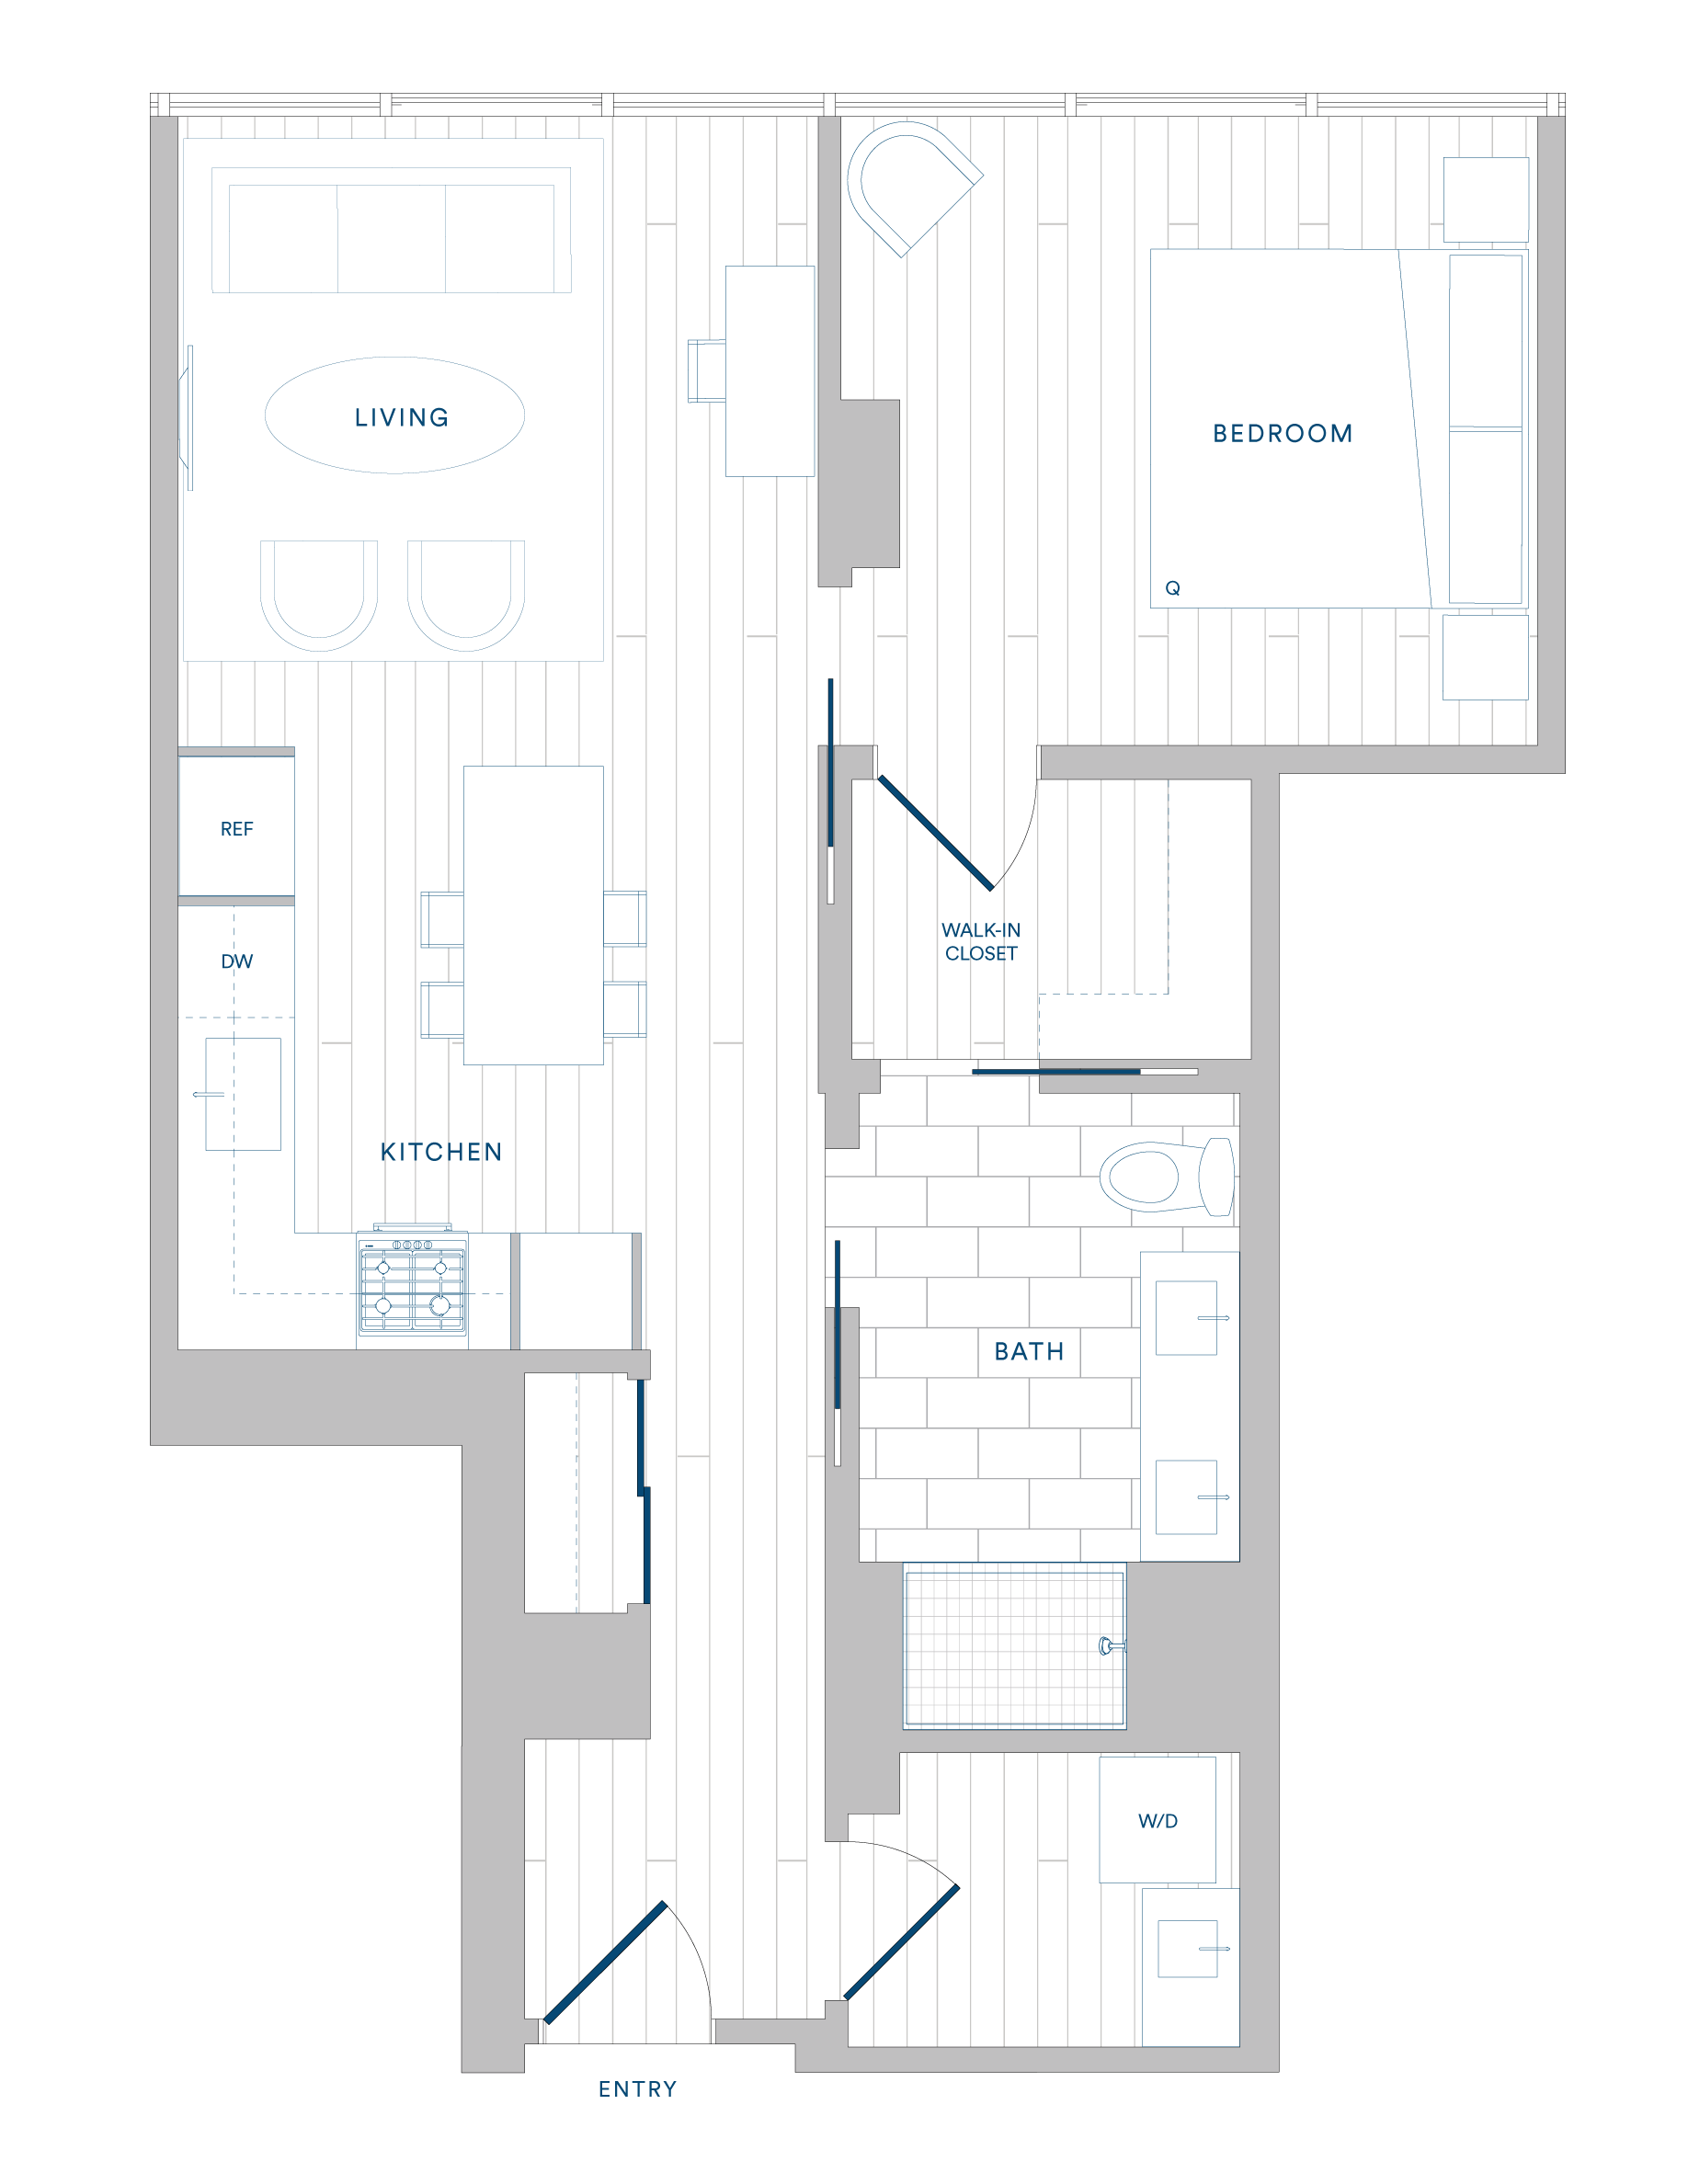 Floorplan for Apartment #518, 1 bedroom unit at Margarite